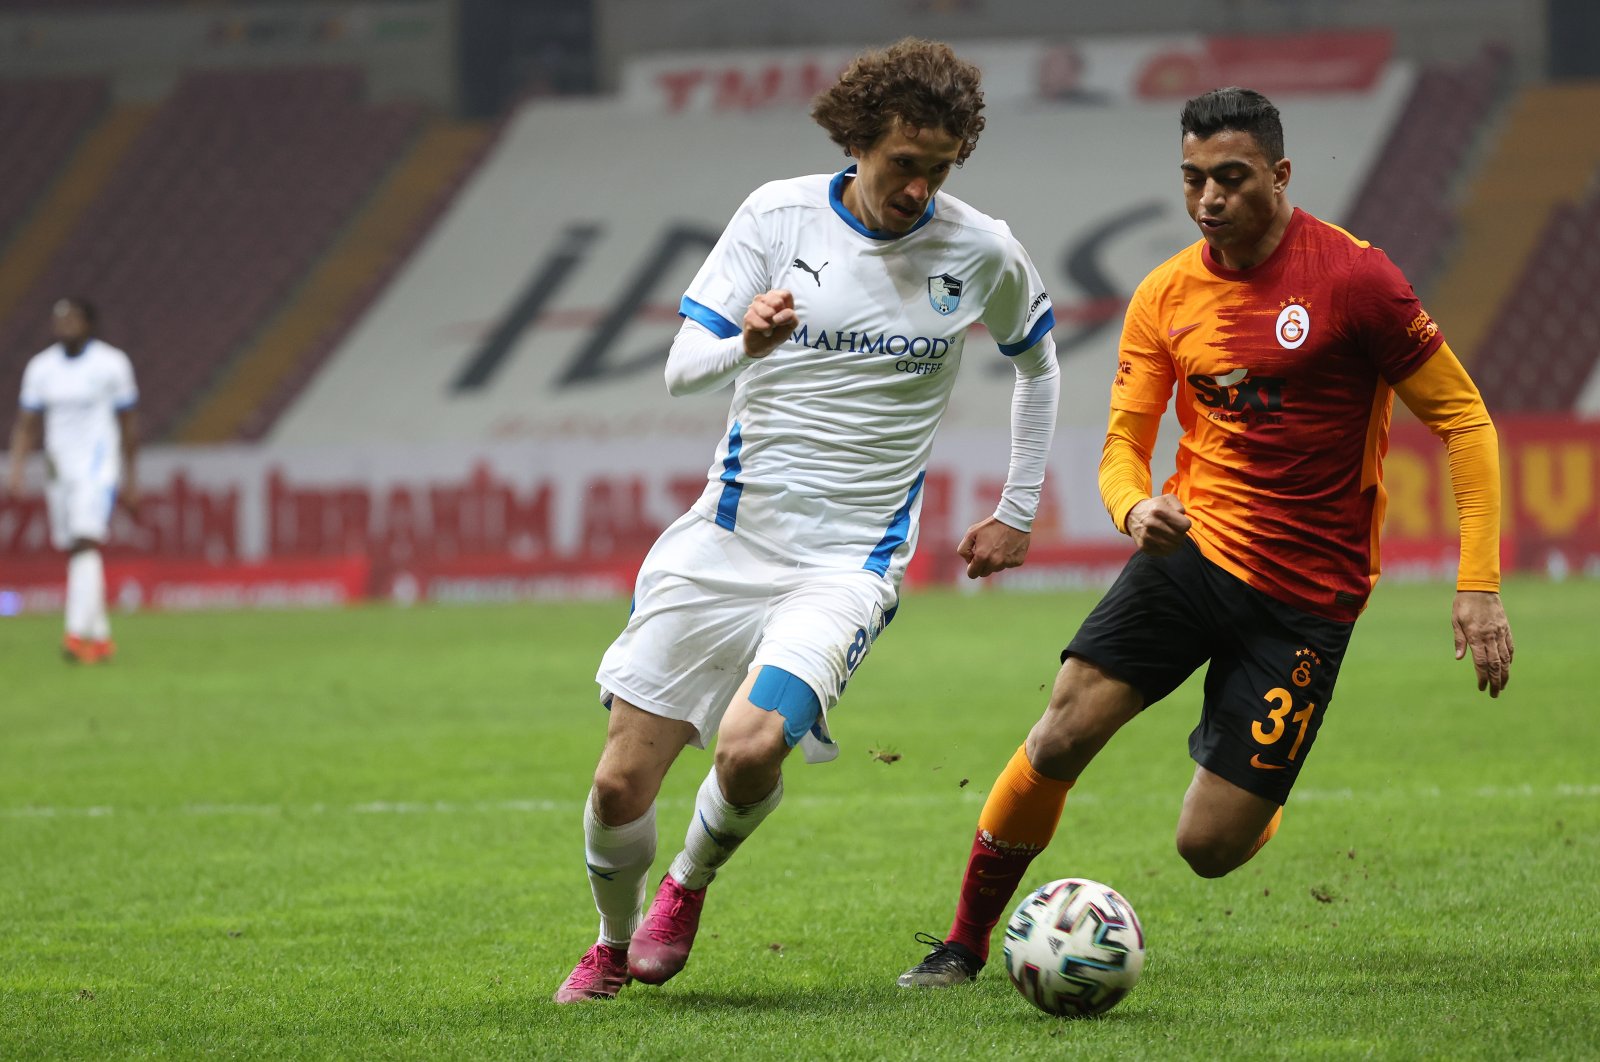 Galatasaray's Egyptian striker Mostafa Mohamed (R) goes past Erzurumspor's Osman Çelik (L) in a Süper Lig match at the Türk Telekom Stadium, Istanbul, Turkey, Feb. 27, 2021.